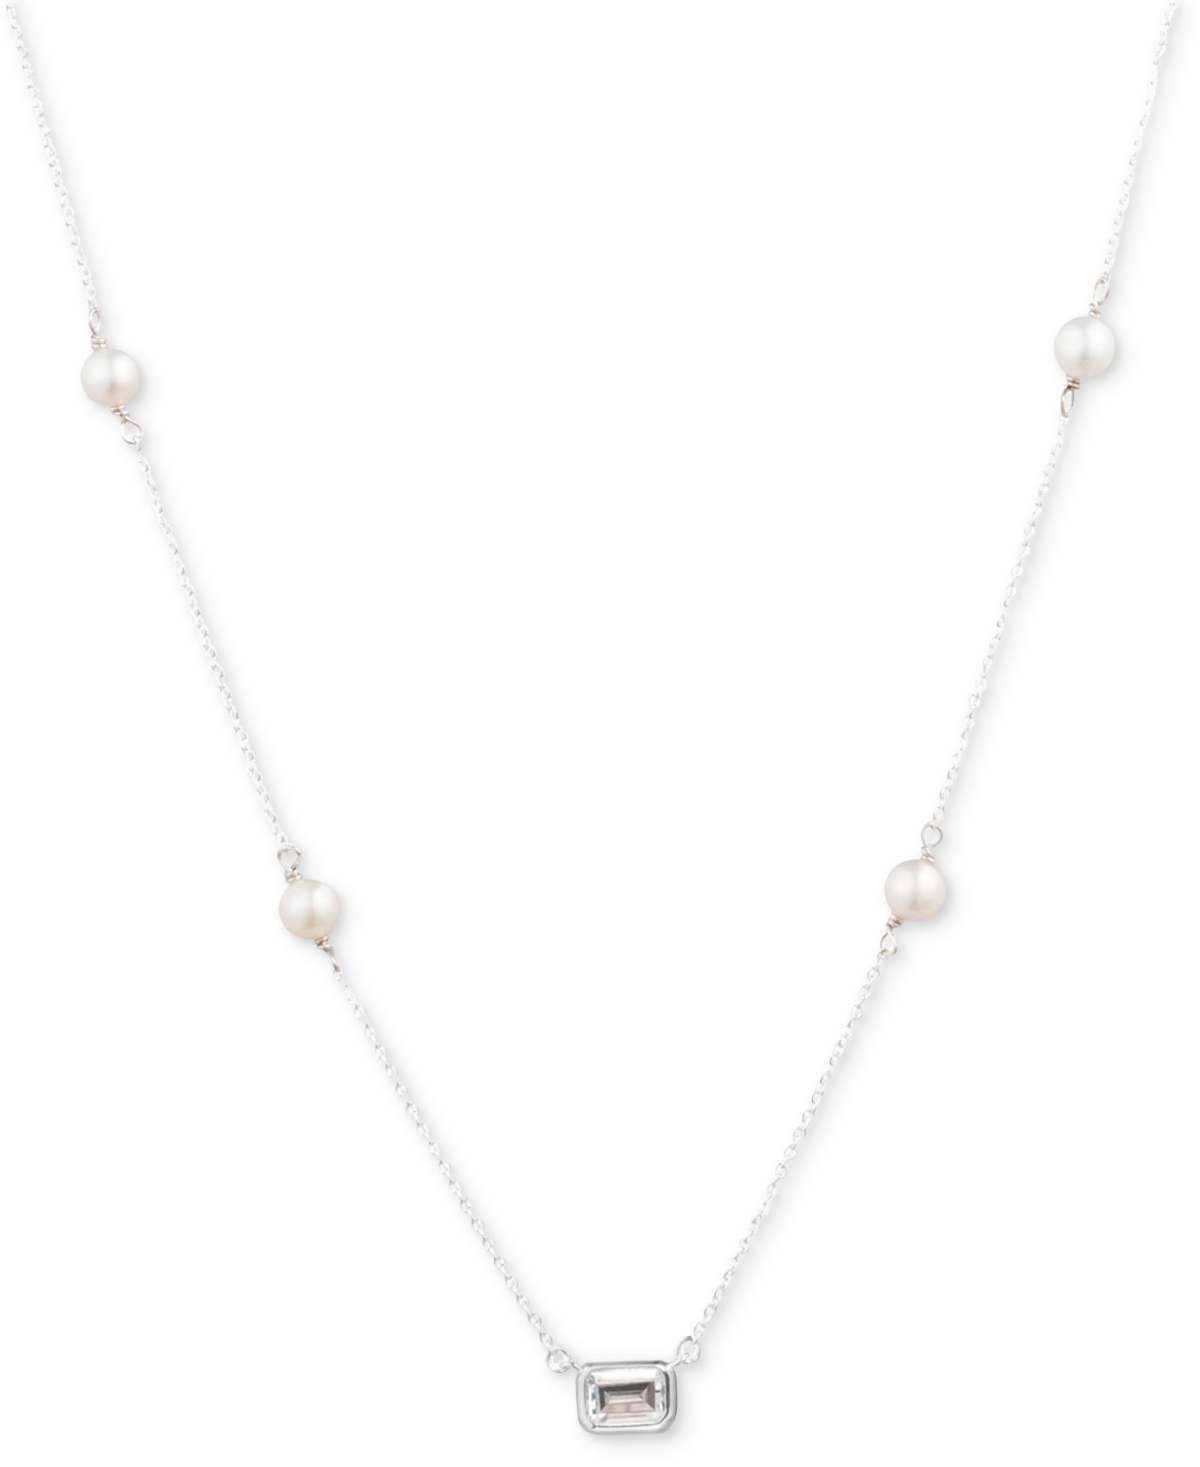 Lauren Ralph Lauren Freshwater Pearl (4 - 4-1/2mm) & Cubic Zirconia Collar Necklace in Sterling Silver, 15" + 3" extender - Sterling Silver